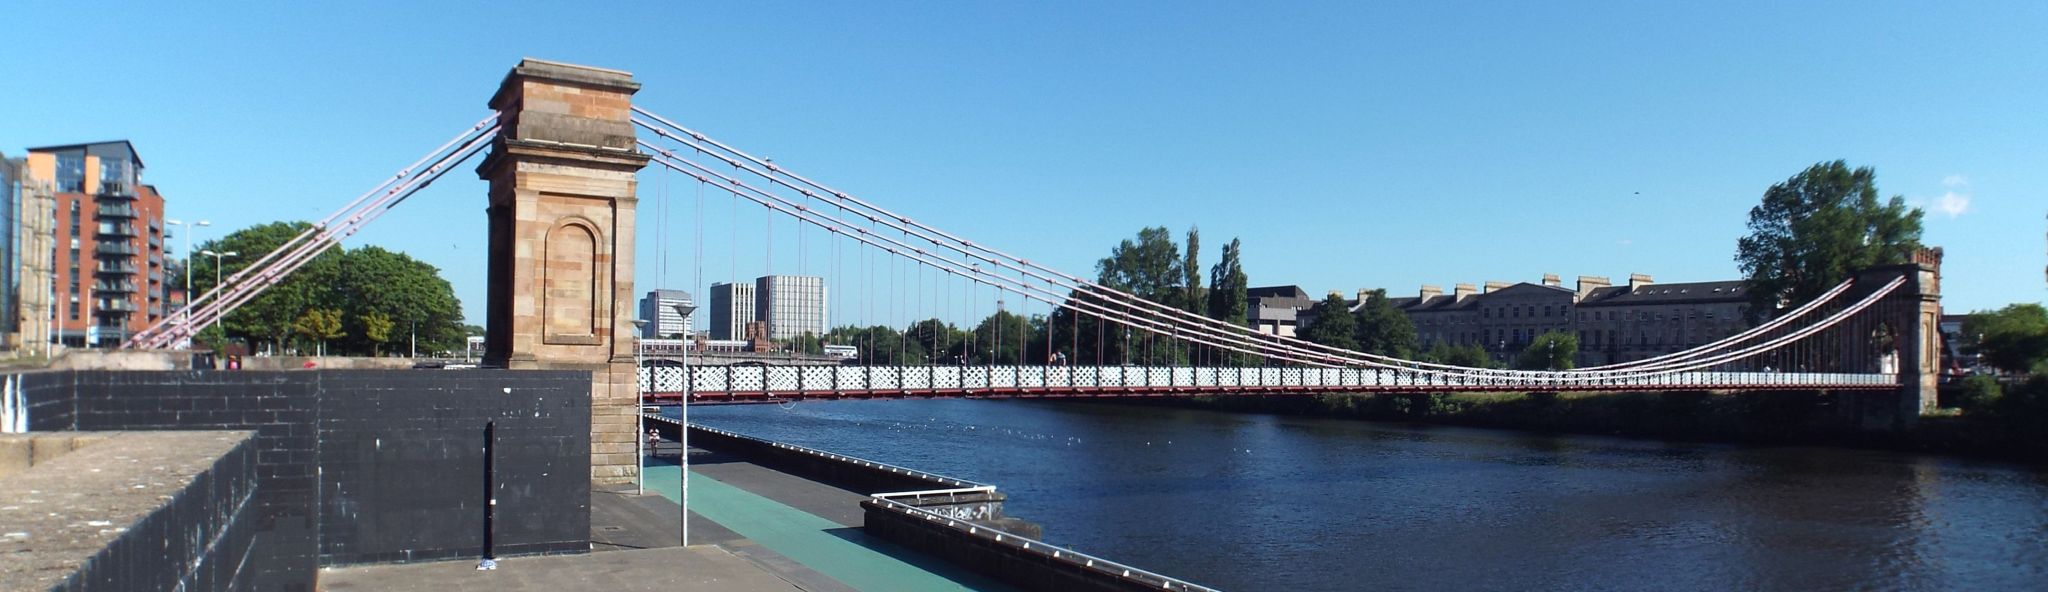 South Portland Street Suspension Bridge across River Clyde in Glasgow